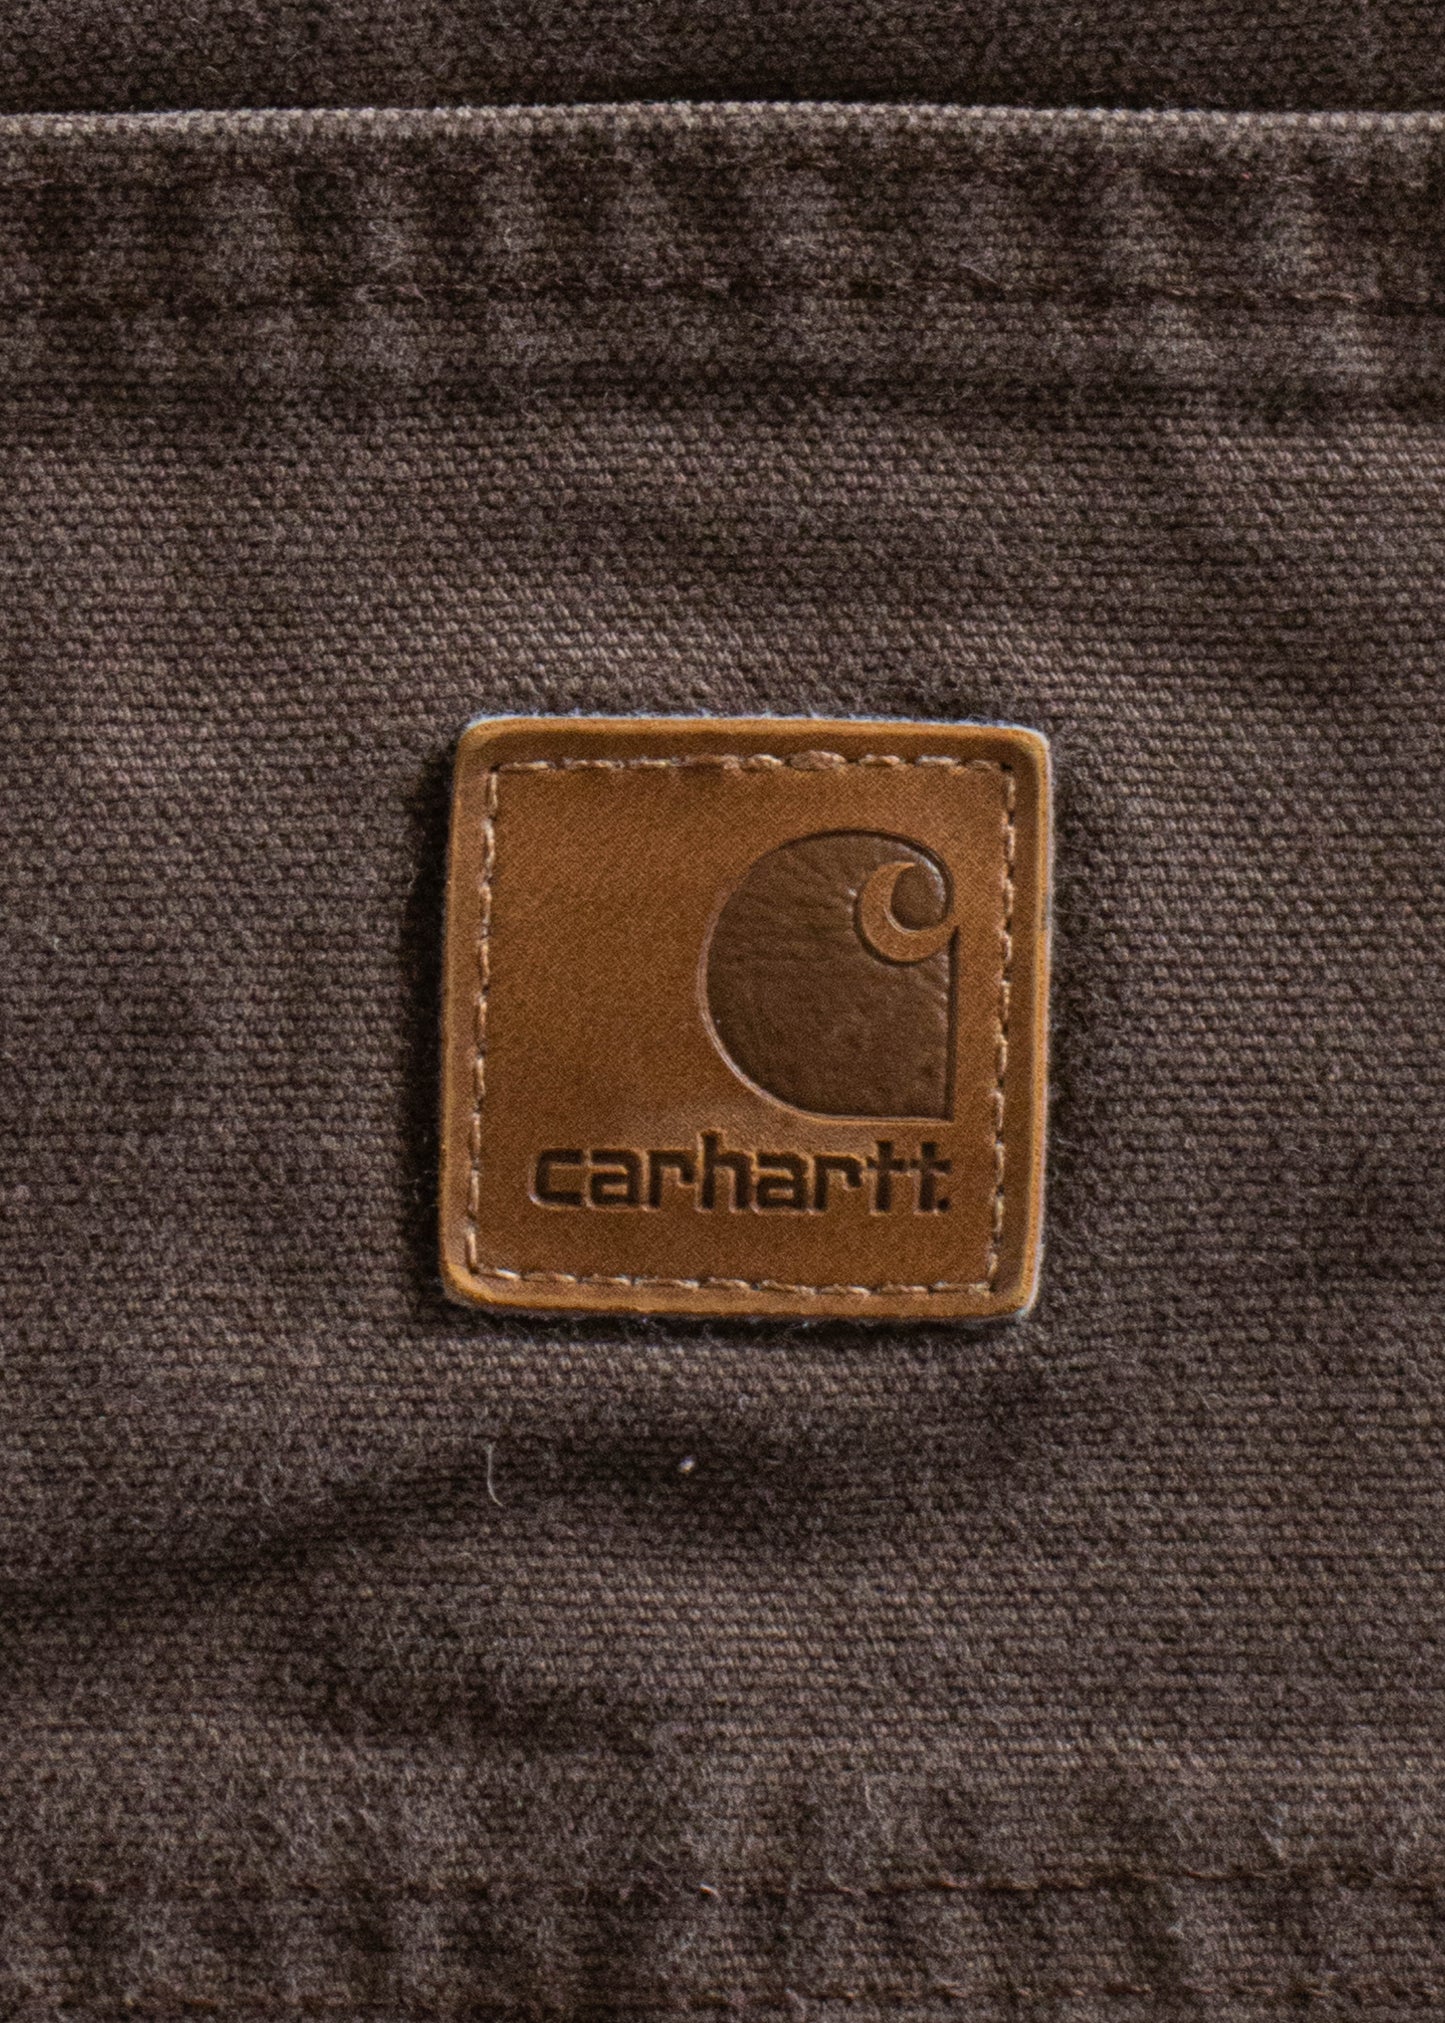 Carhartt Carpenter Pants Size Women's 42 Men's 44